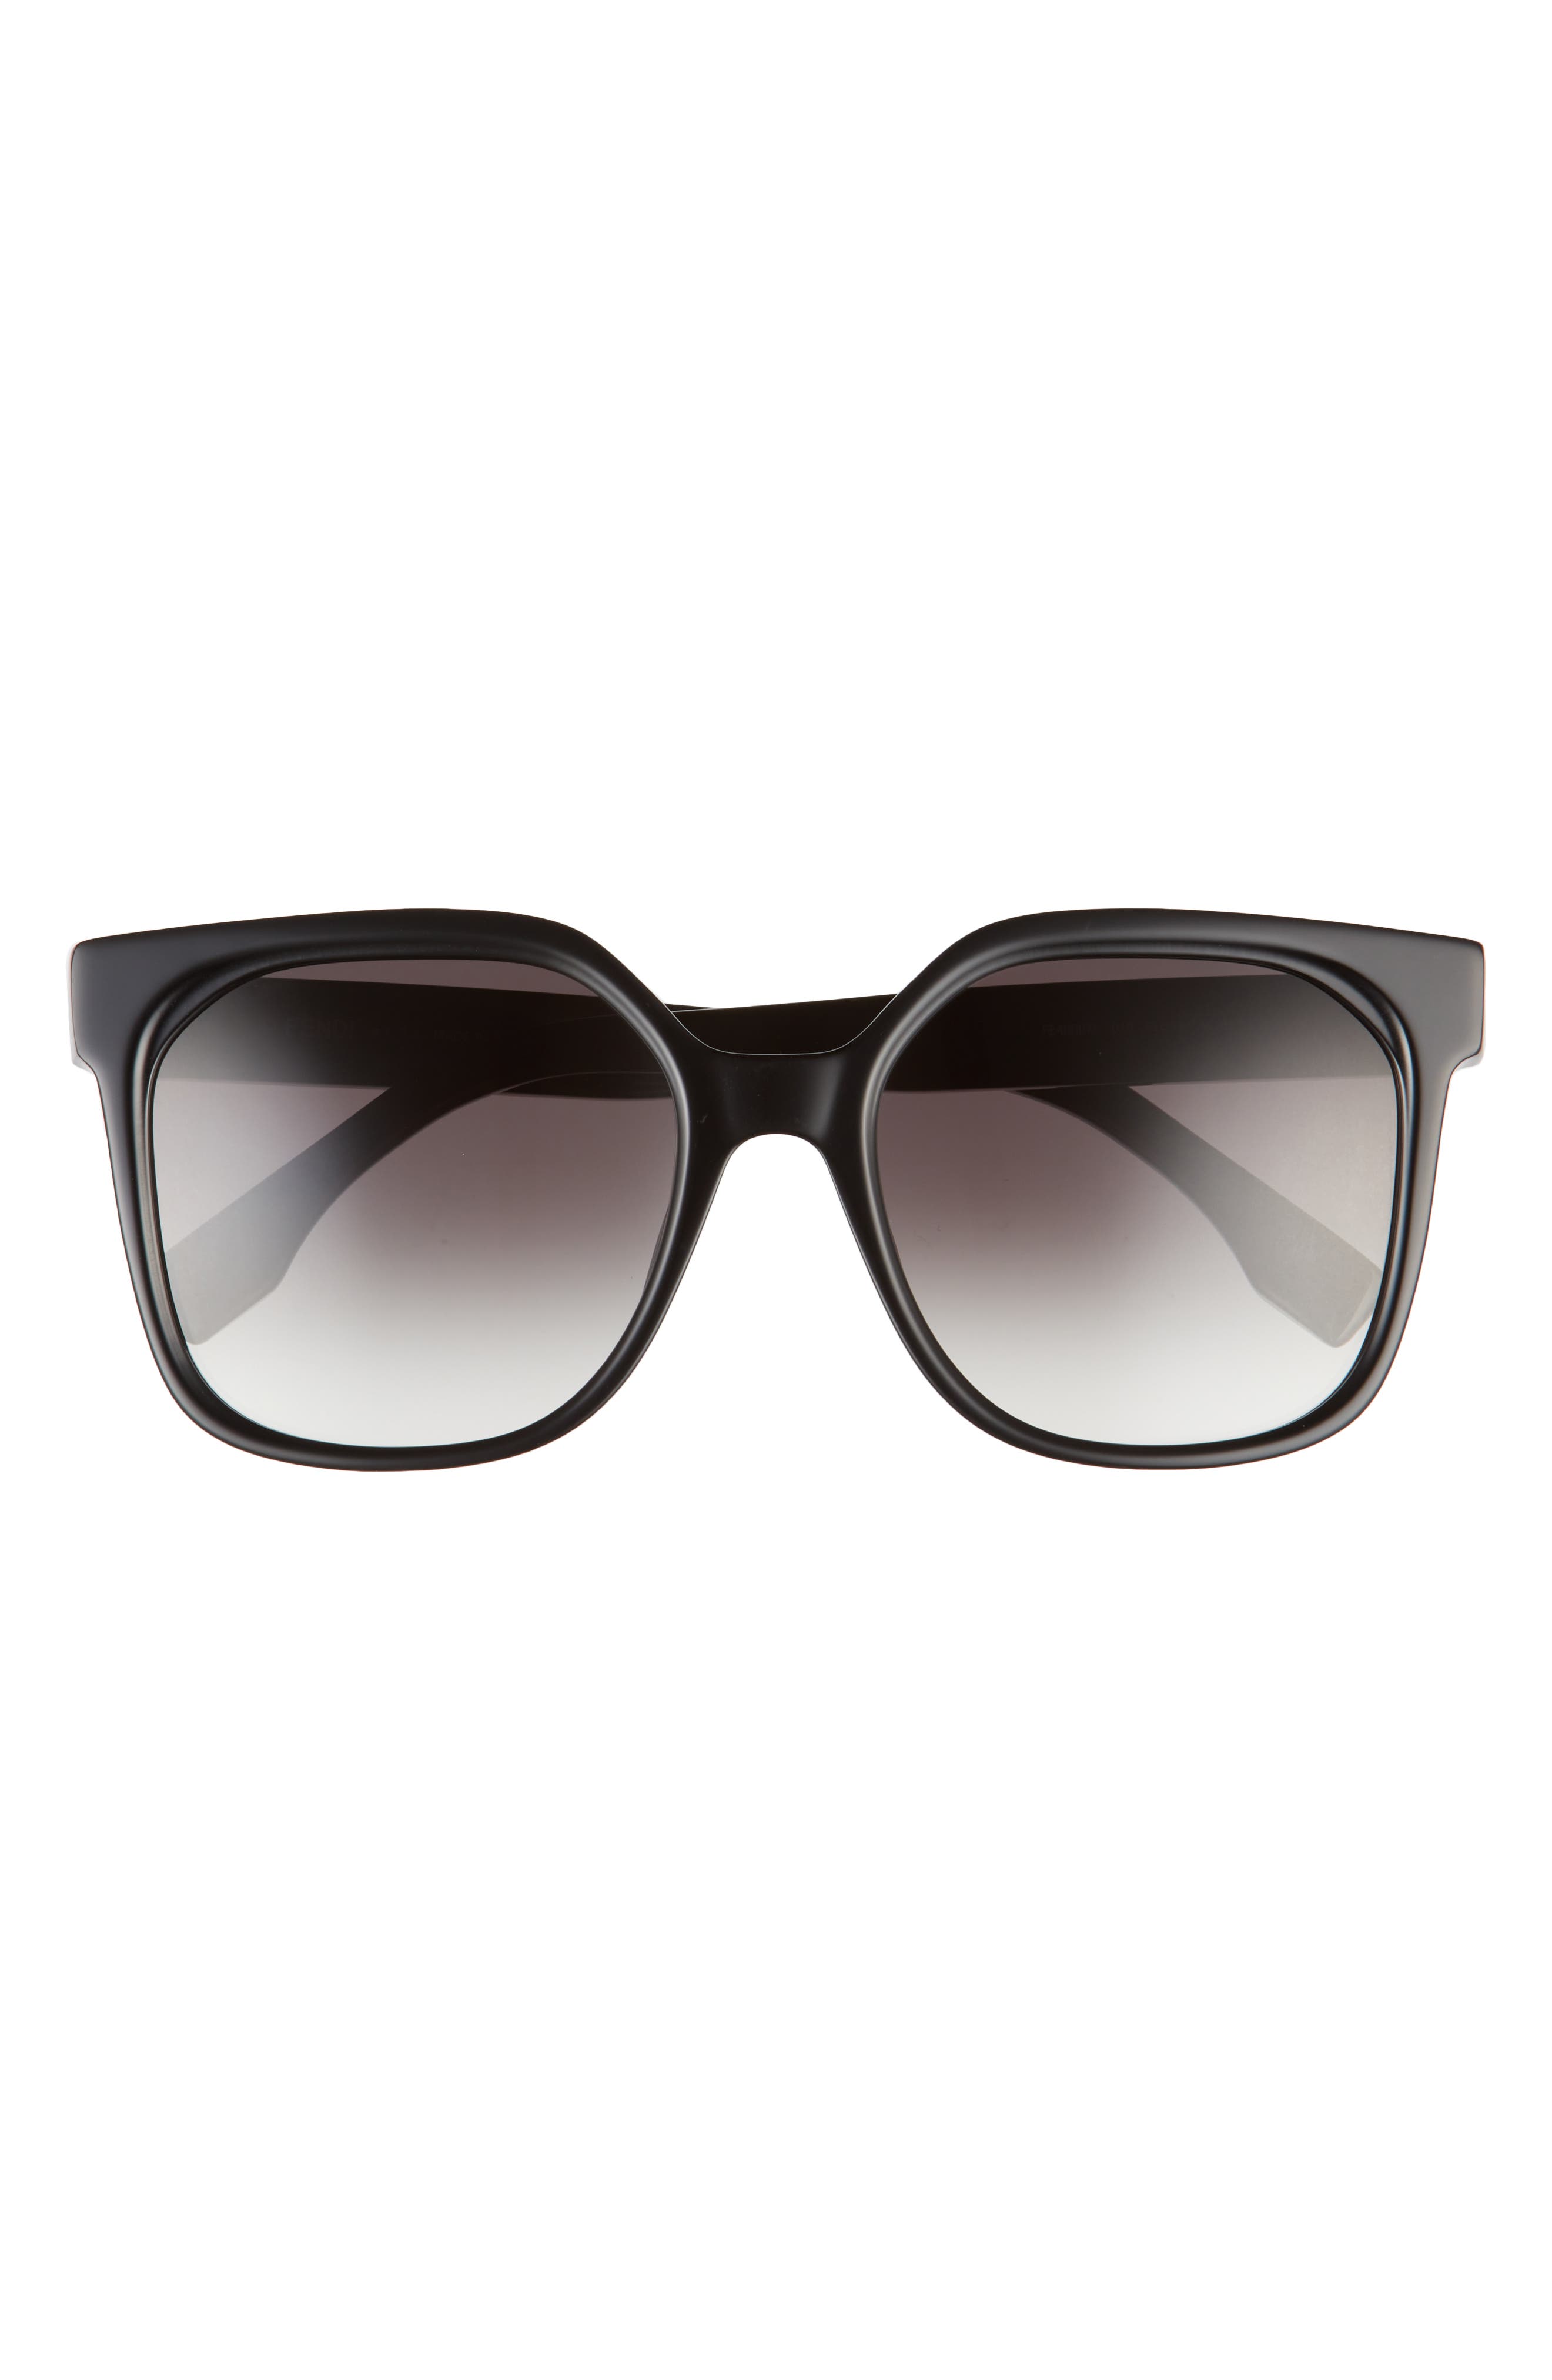 Fendi 55mm Square Sunglasses in Shiny Black /Gradient Smoke at Nordstrom